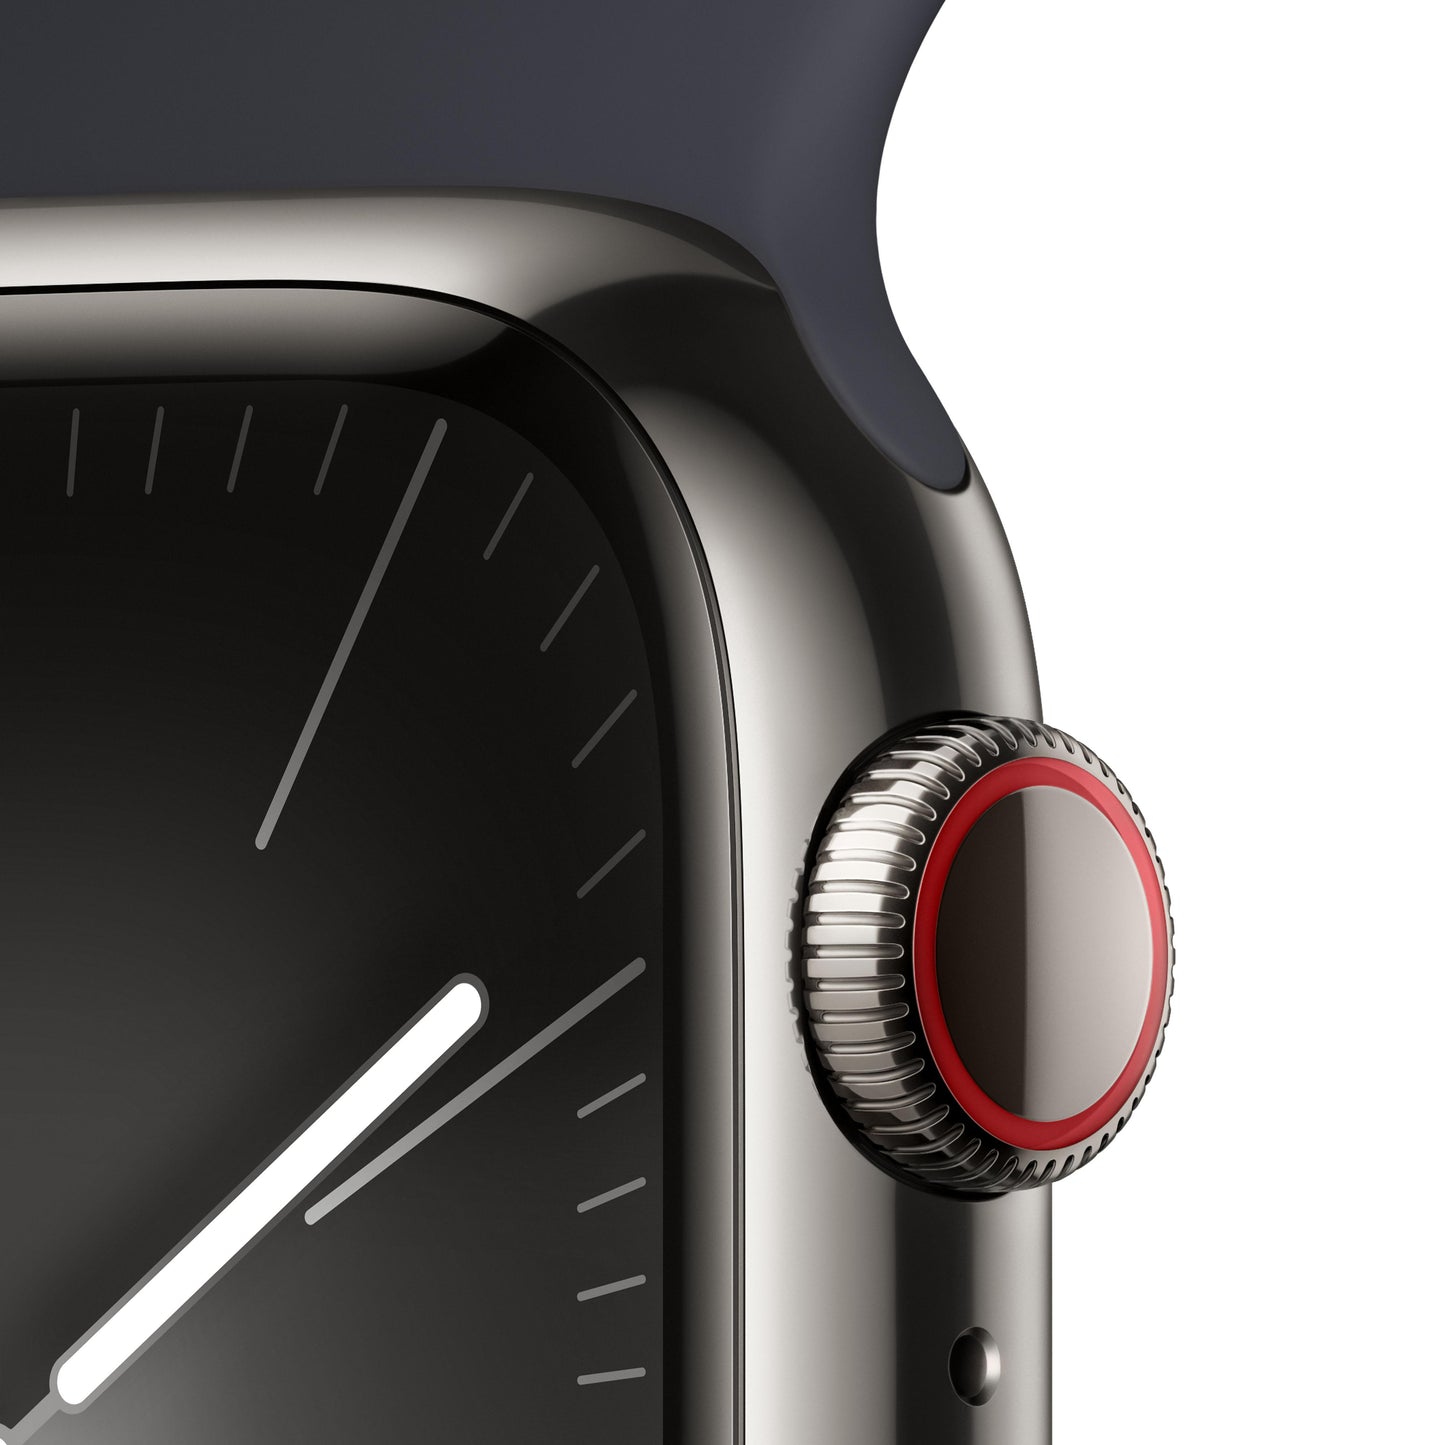 Apple Watch Series 9 (GPS + Cellular) - Caja de acero inoxidable en grafito de 41 mm - Correa deportiva color medianoche - Talla M/L